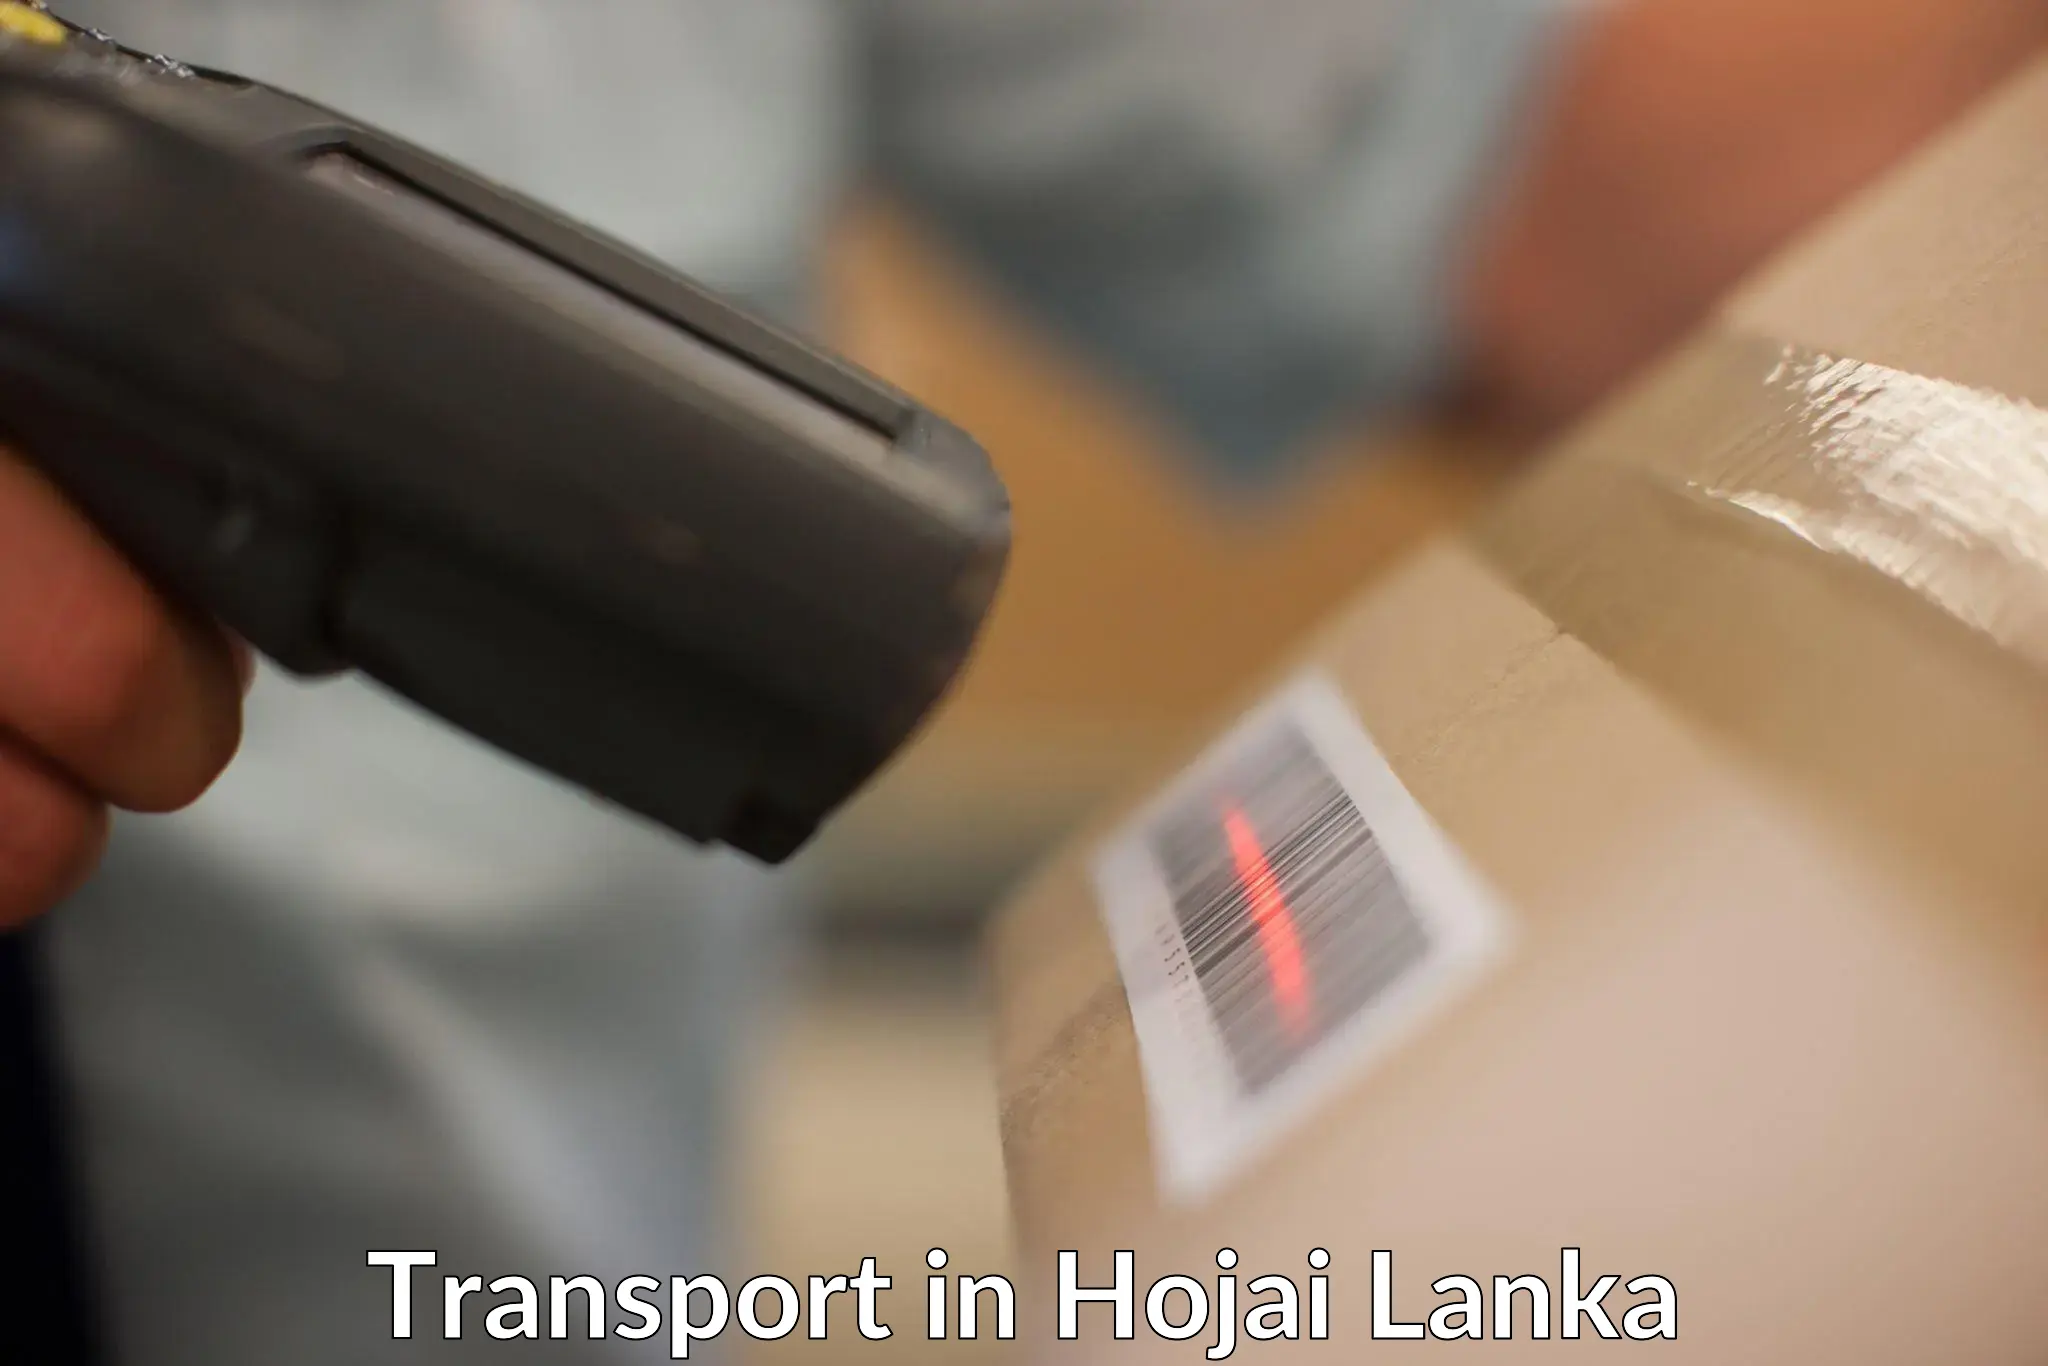 Nearby transport service in Hojai Lanka